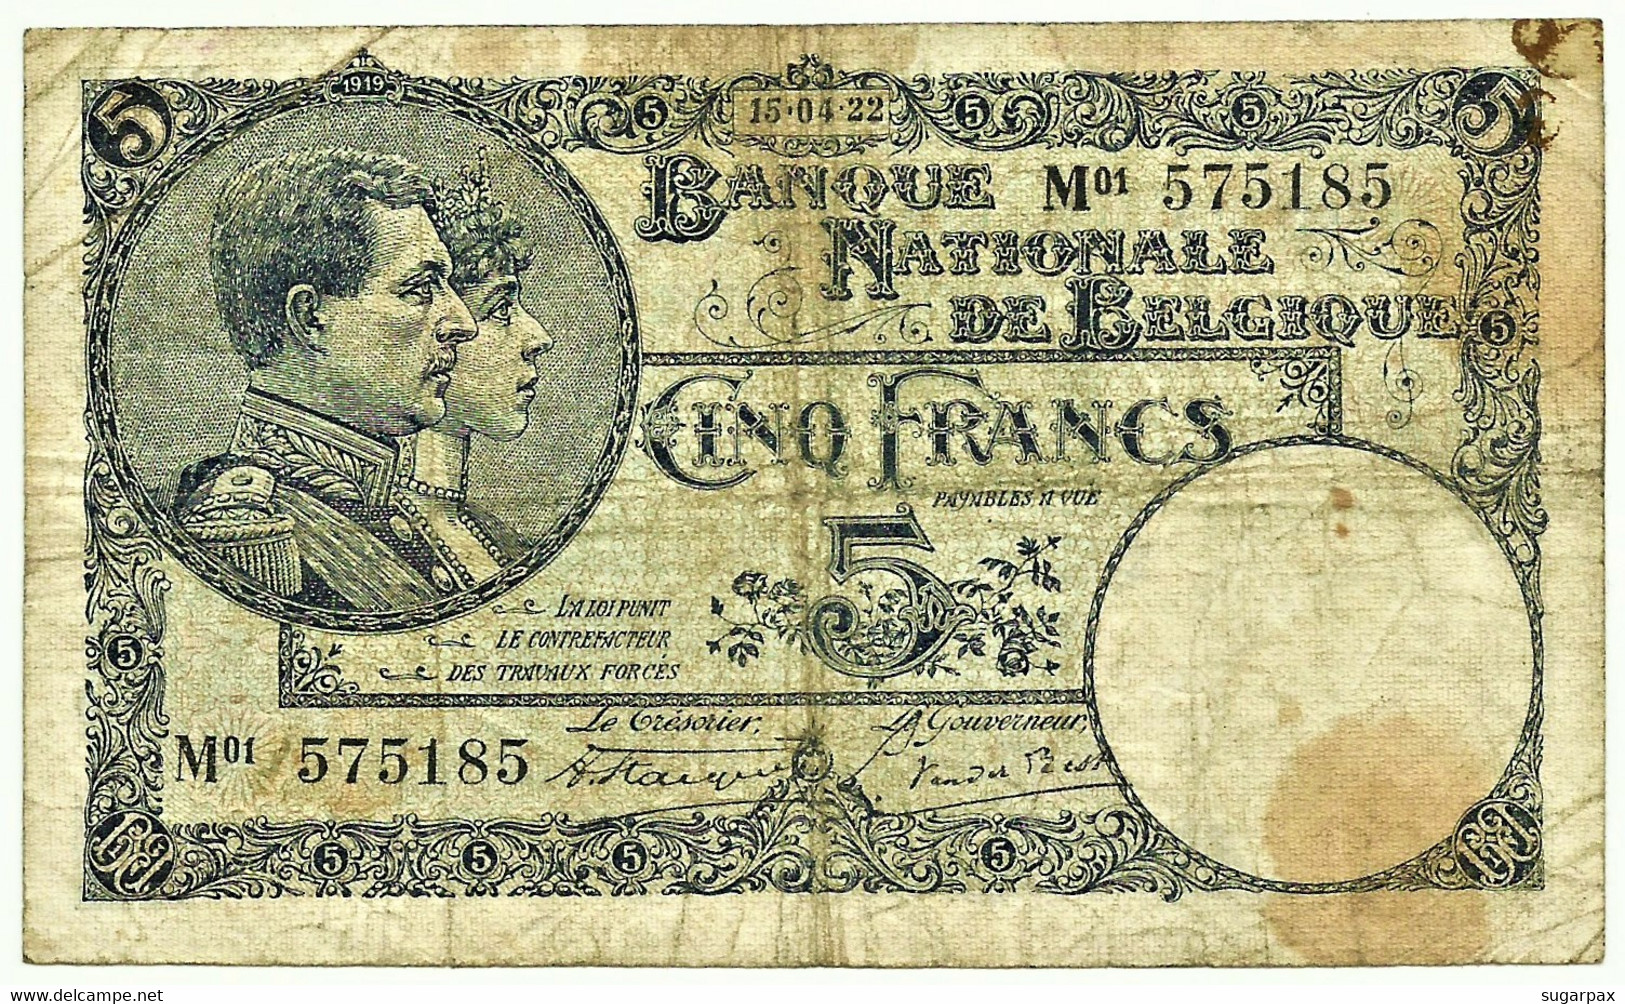 Belgium - 5 Francs - 15.04.1922 - Pick 93 - Serie M 01 - Belgie Belgique - 5 Francos